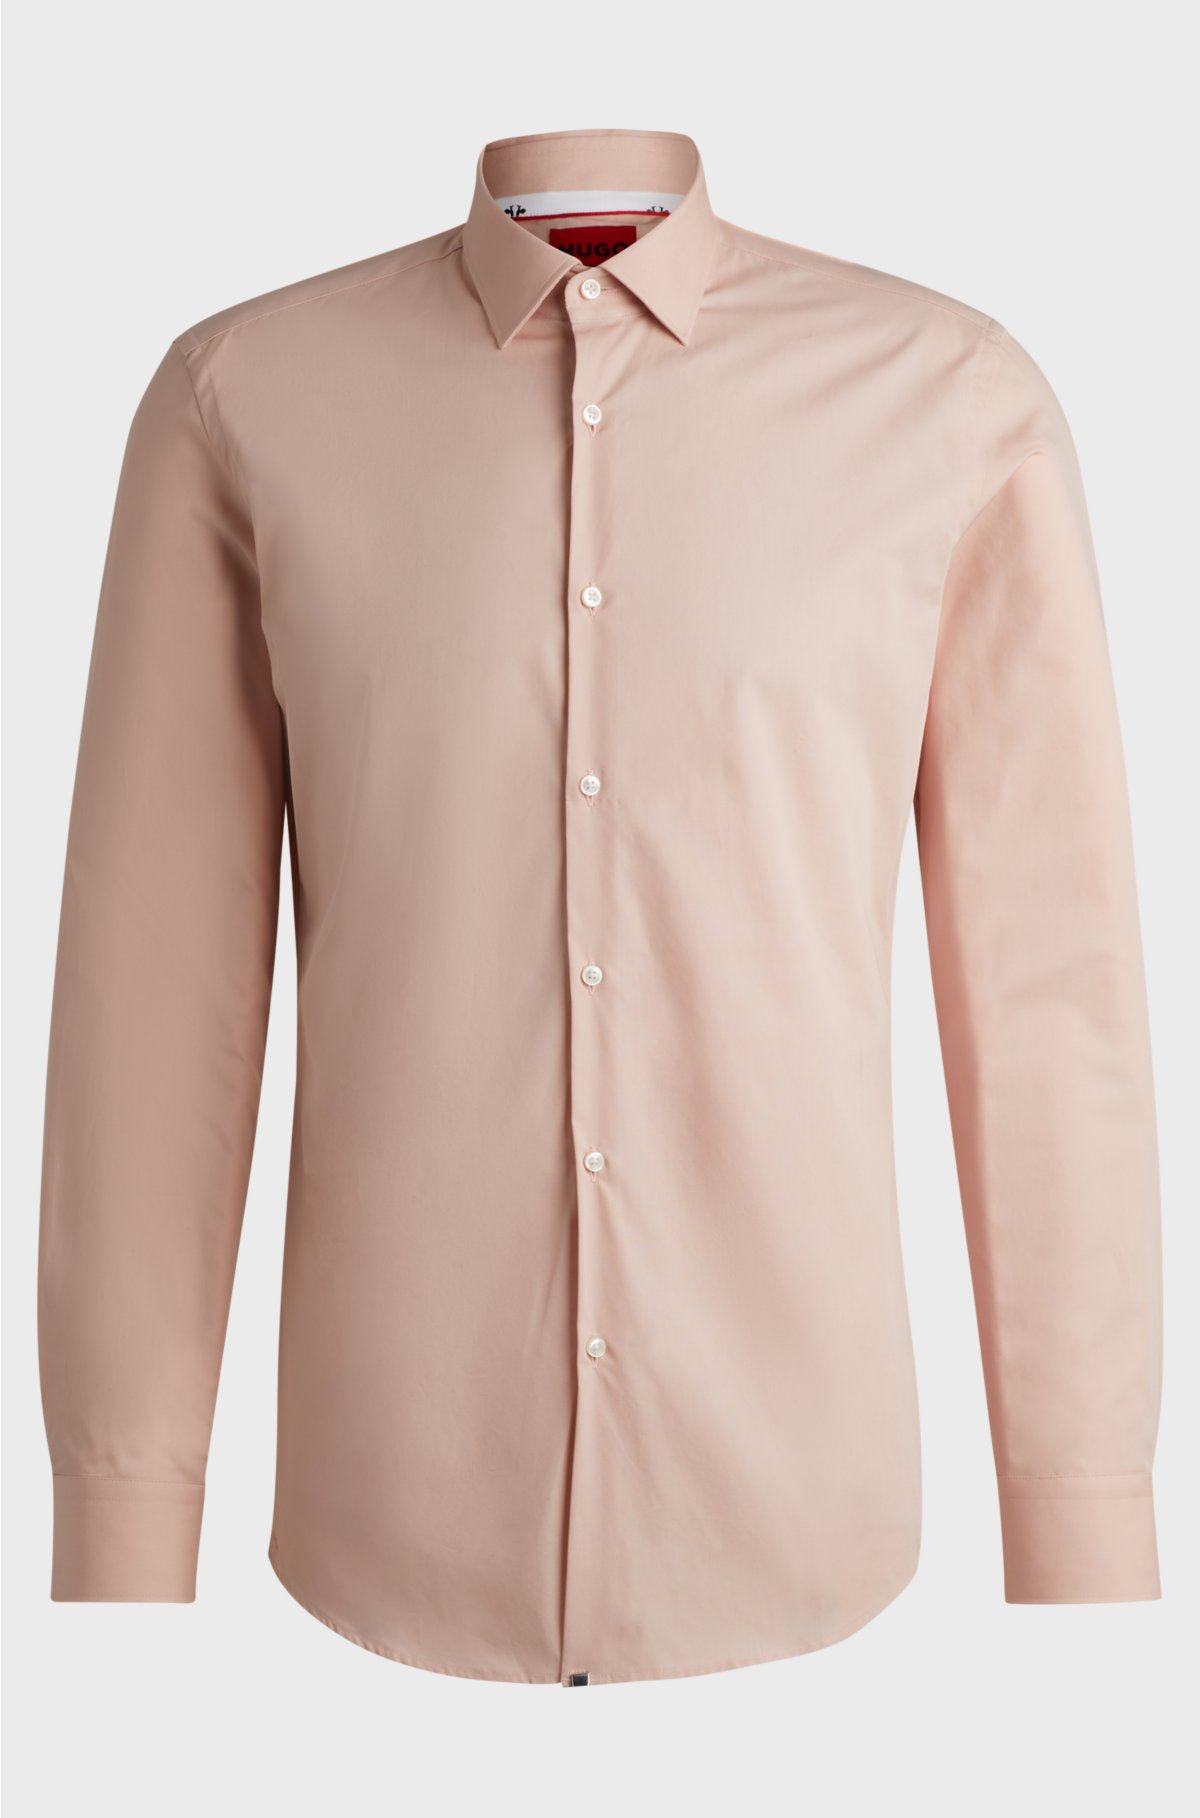 Slim-fit shirt in easy-iron cotton poplin, light pink